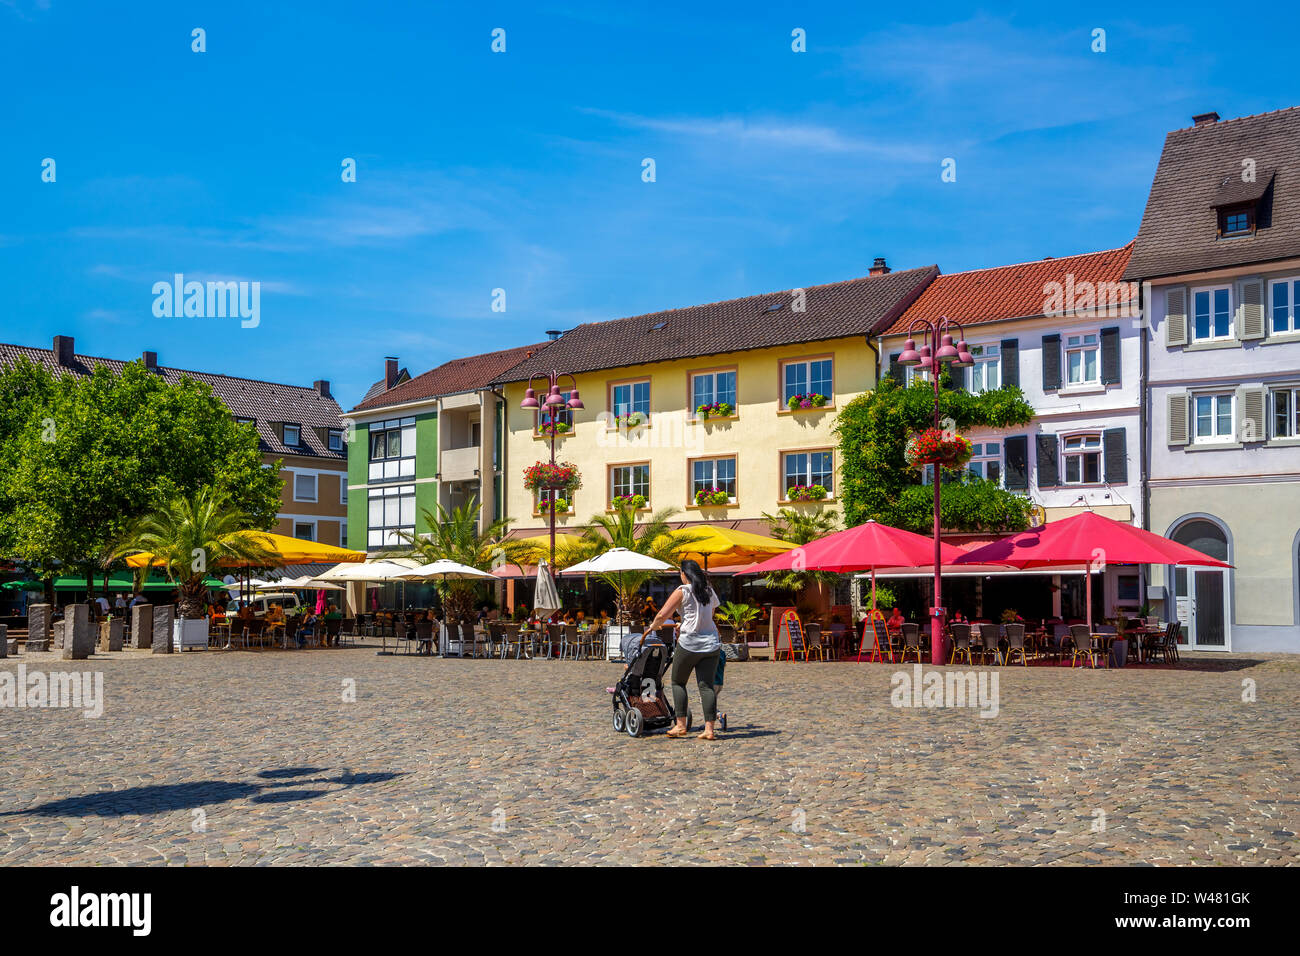 Historical city of Lahr Schwarzwald, Germany Stock Photo